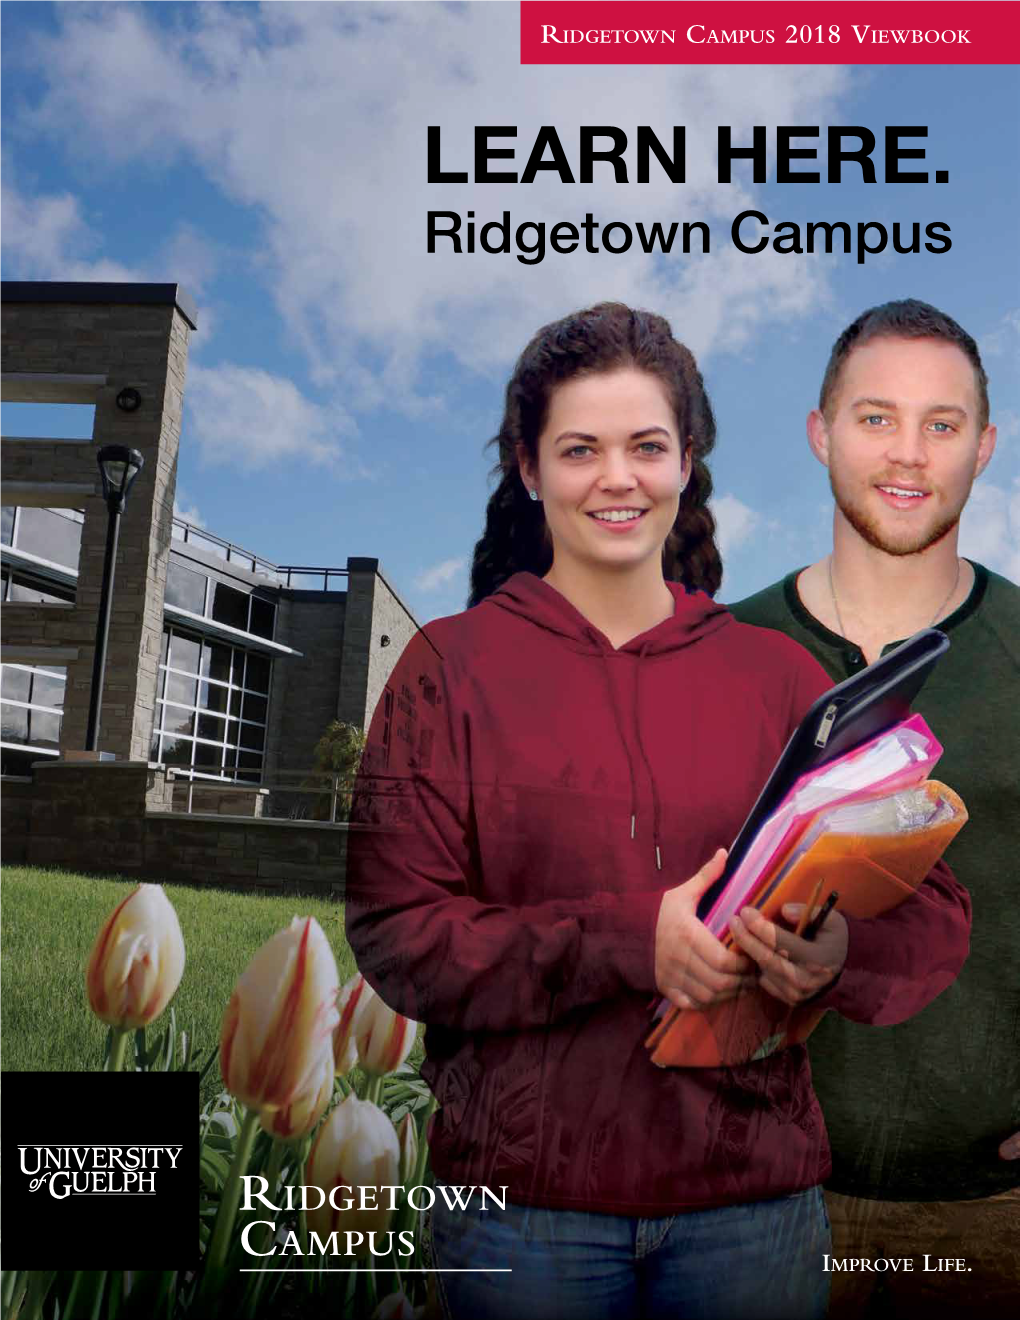 UNIVERSITY of GUELPH, RIDGETOWN CAMPUS Welcome to Ridgetown Campus